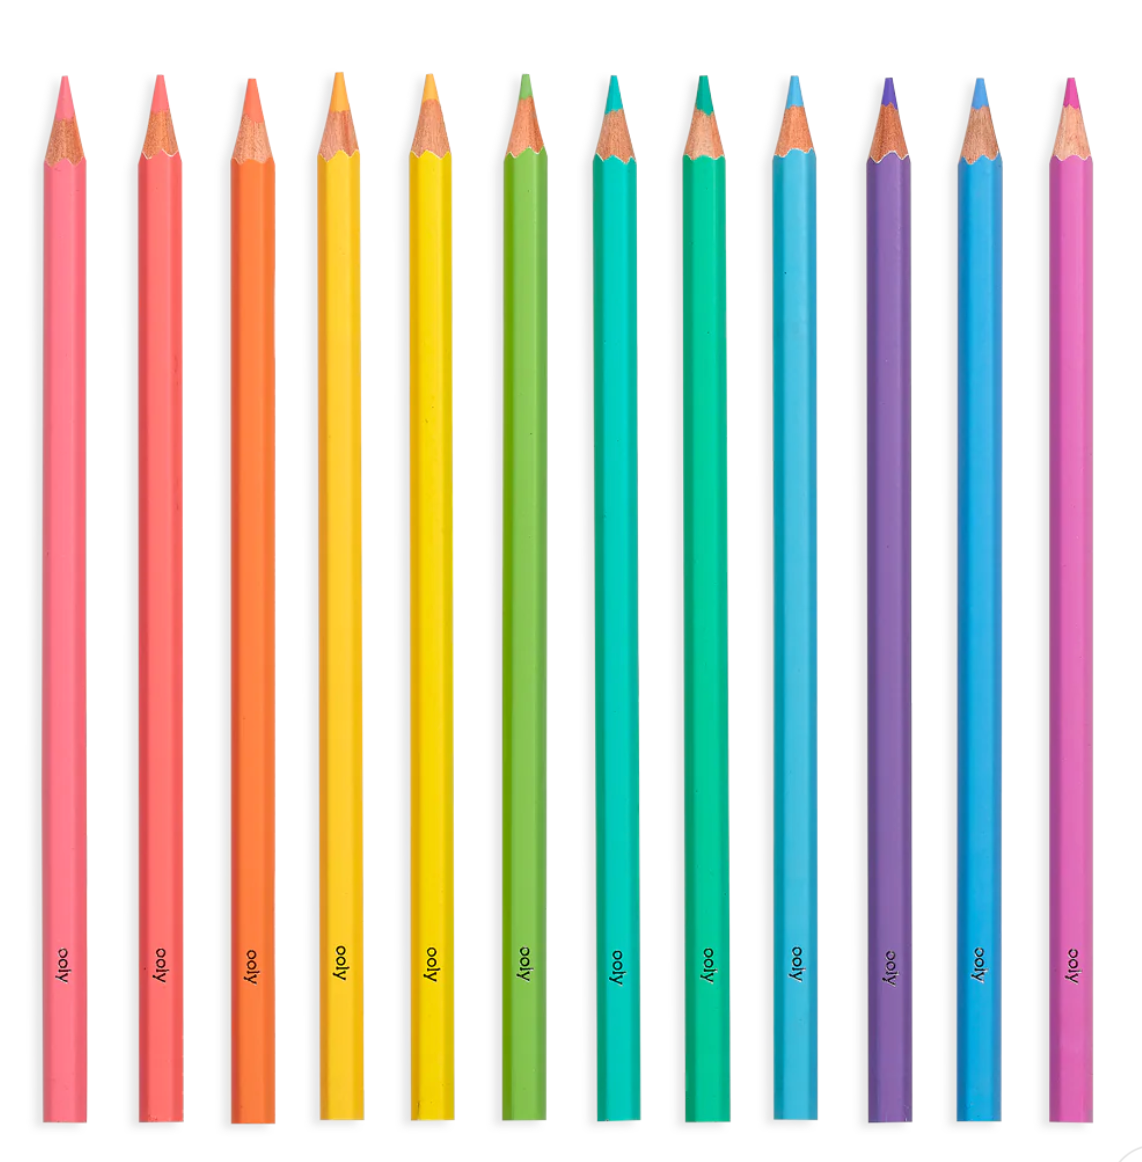 Soft-Hued Colored Pencils - Set of 12